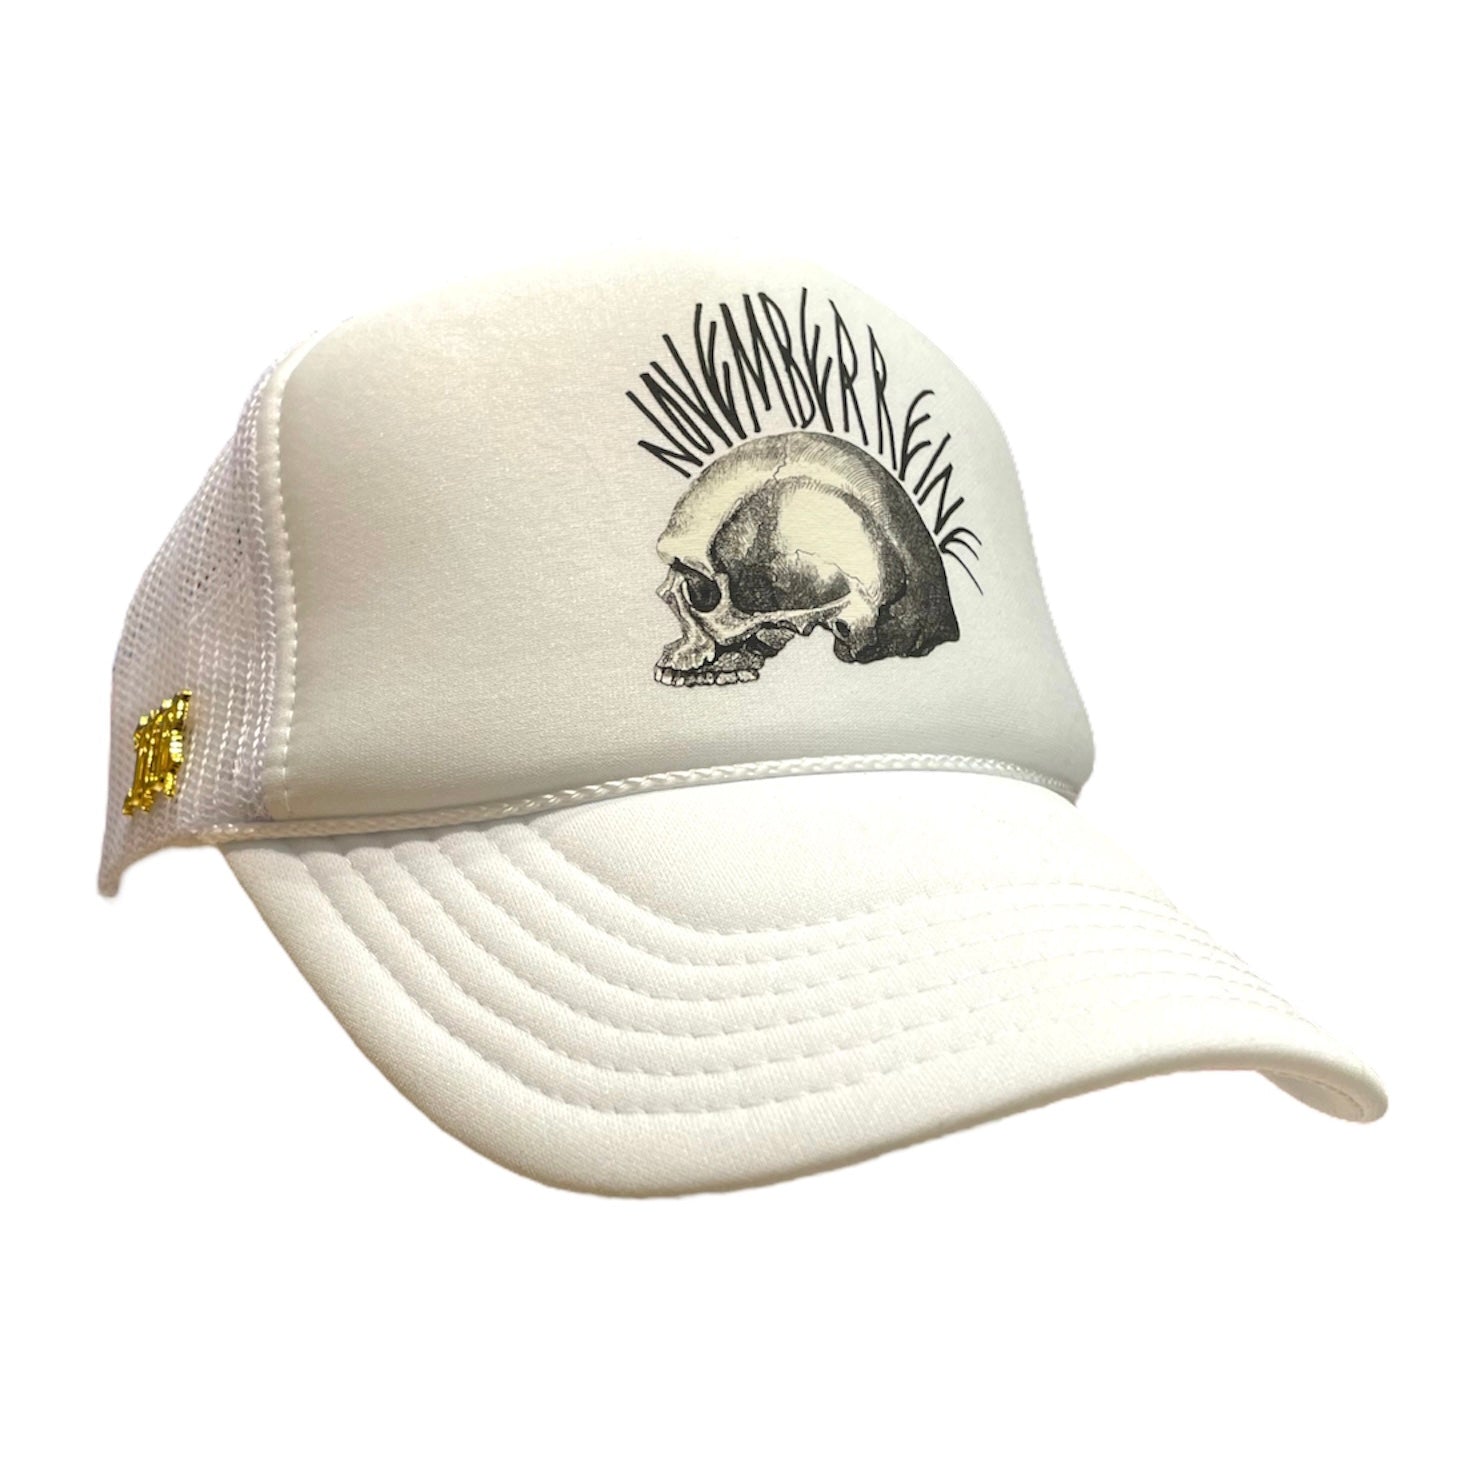 Rich Punk$ Trucker Hat